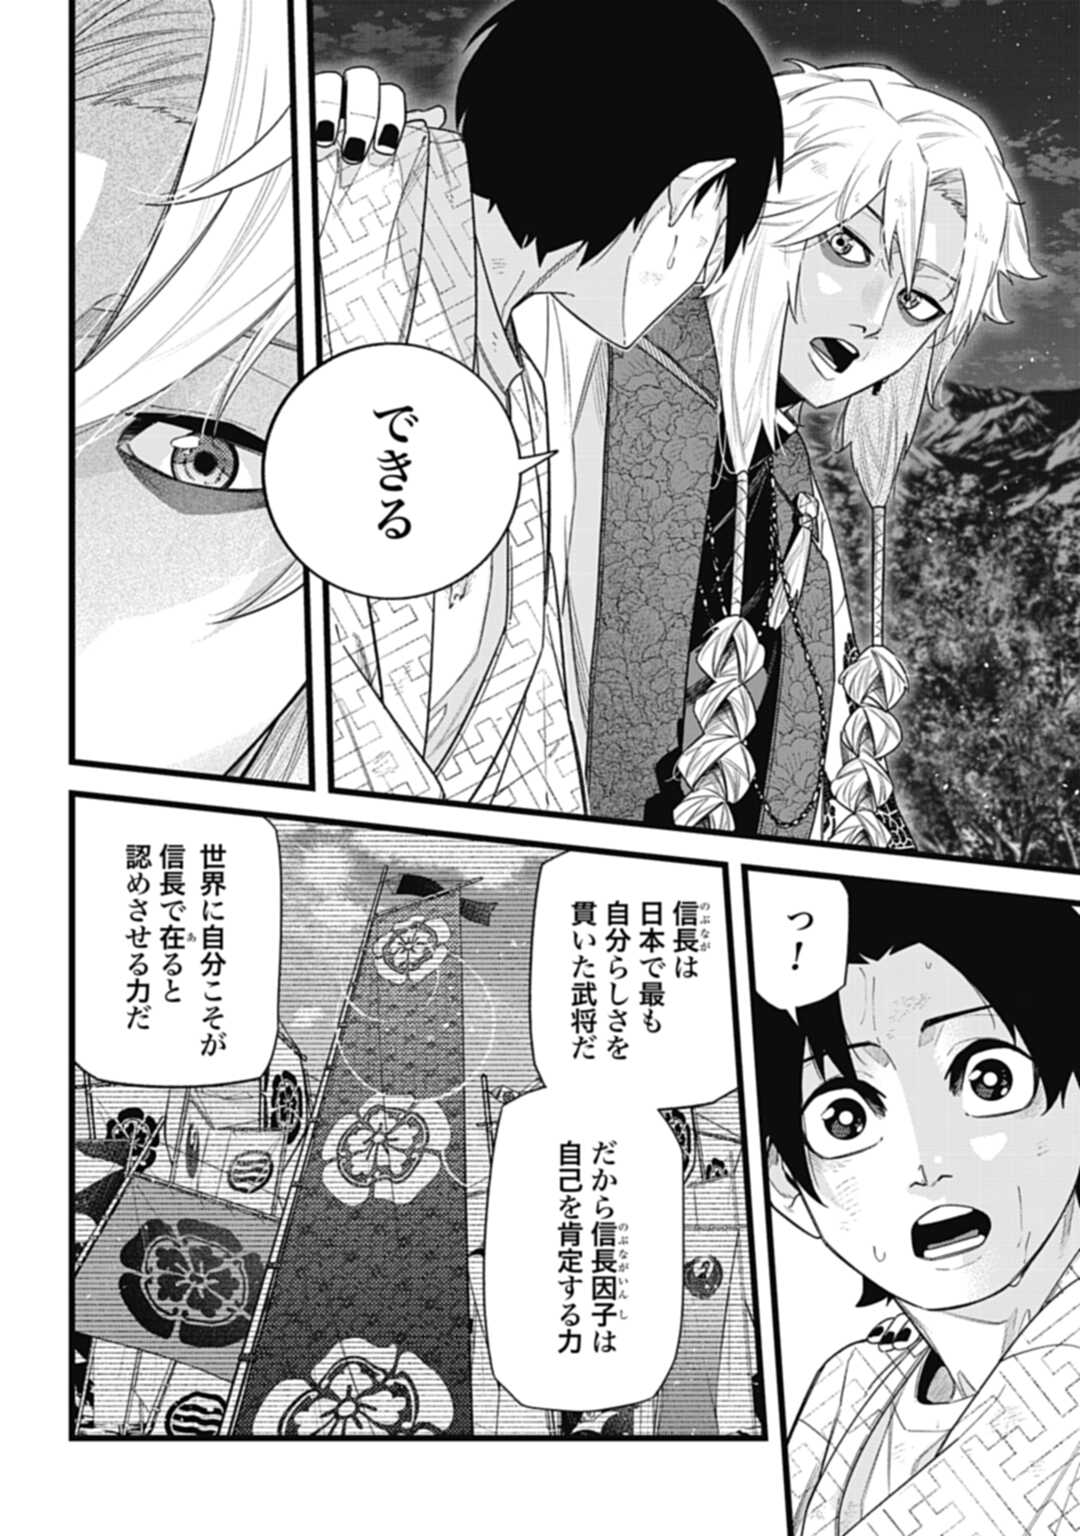 Nobunaga Multiverse - Chapter 10.3 - Page 2